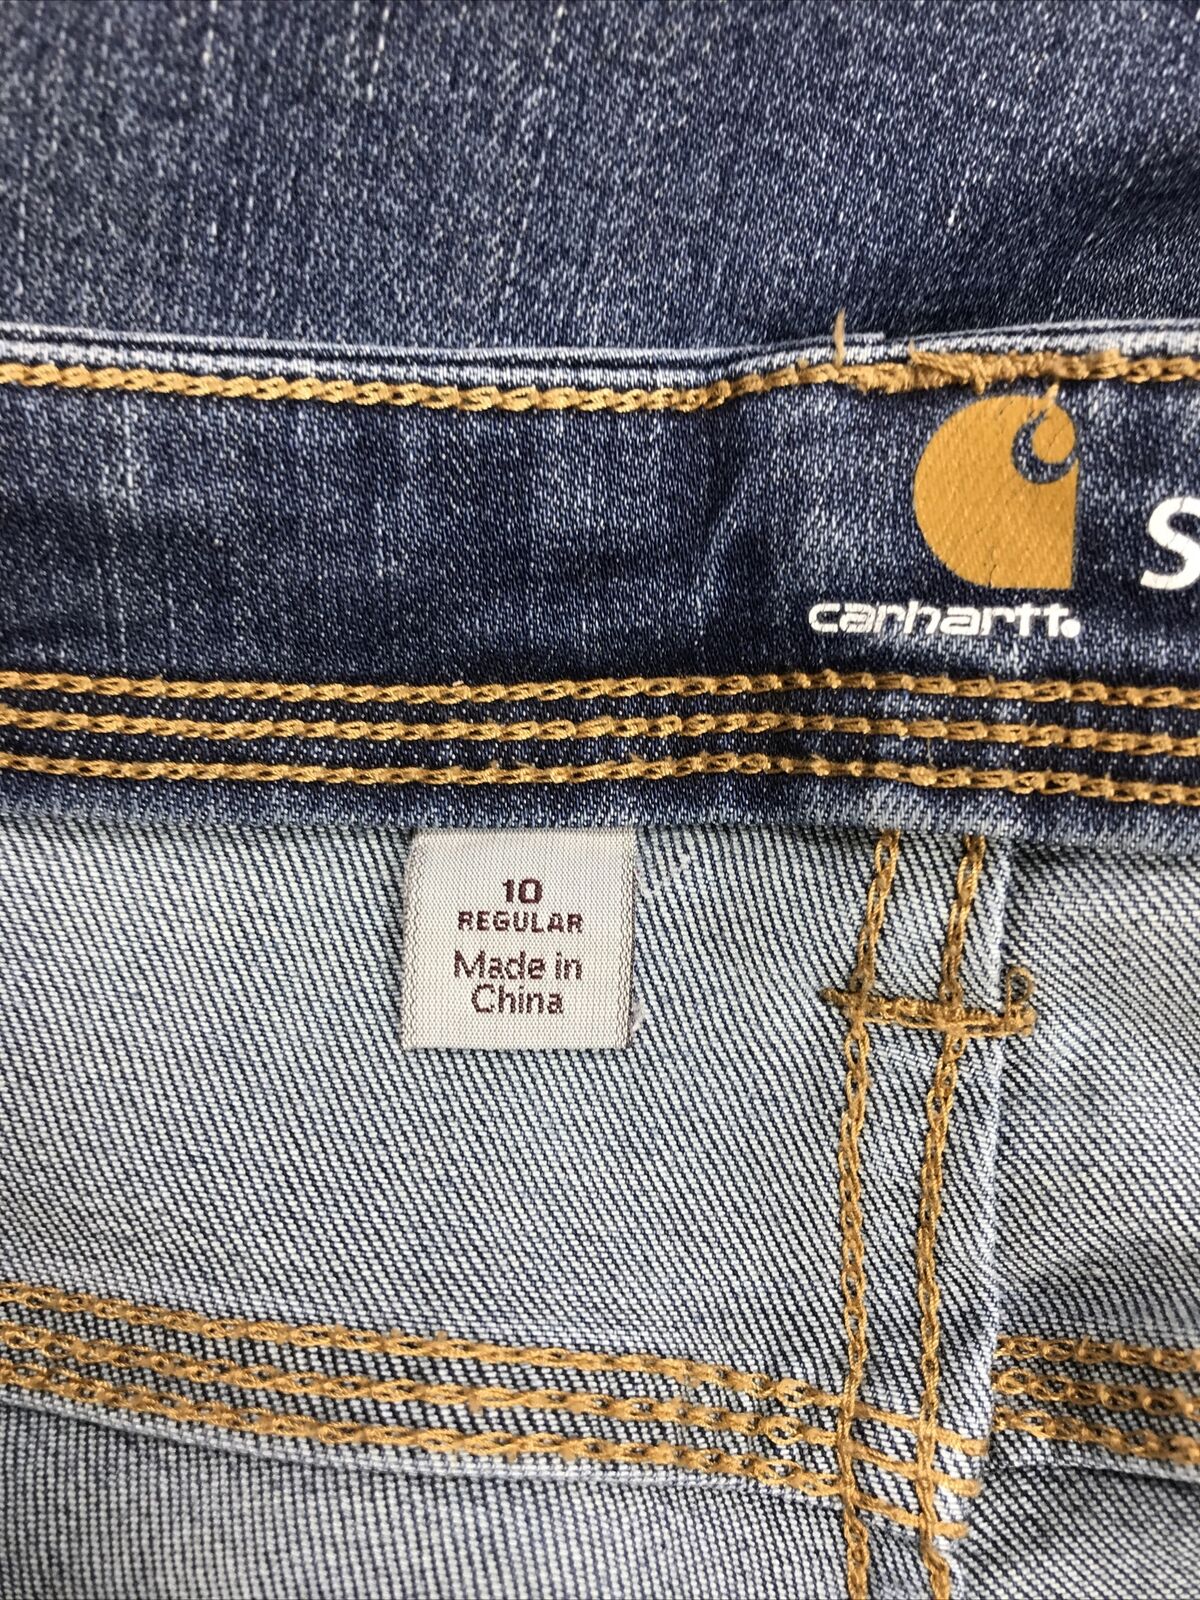 Carhartt Women's Medium Wash Sim Fit Denim Jeans - 10